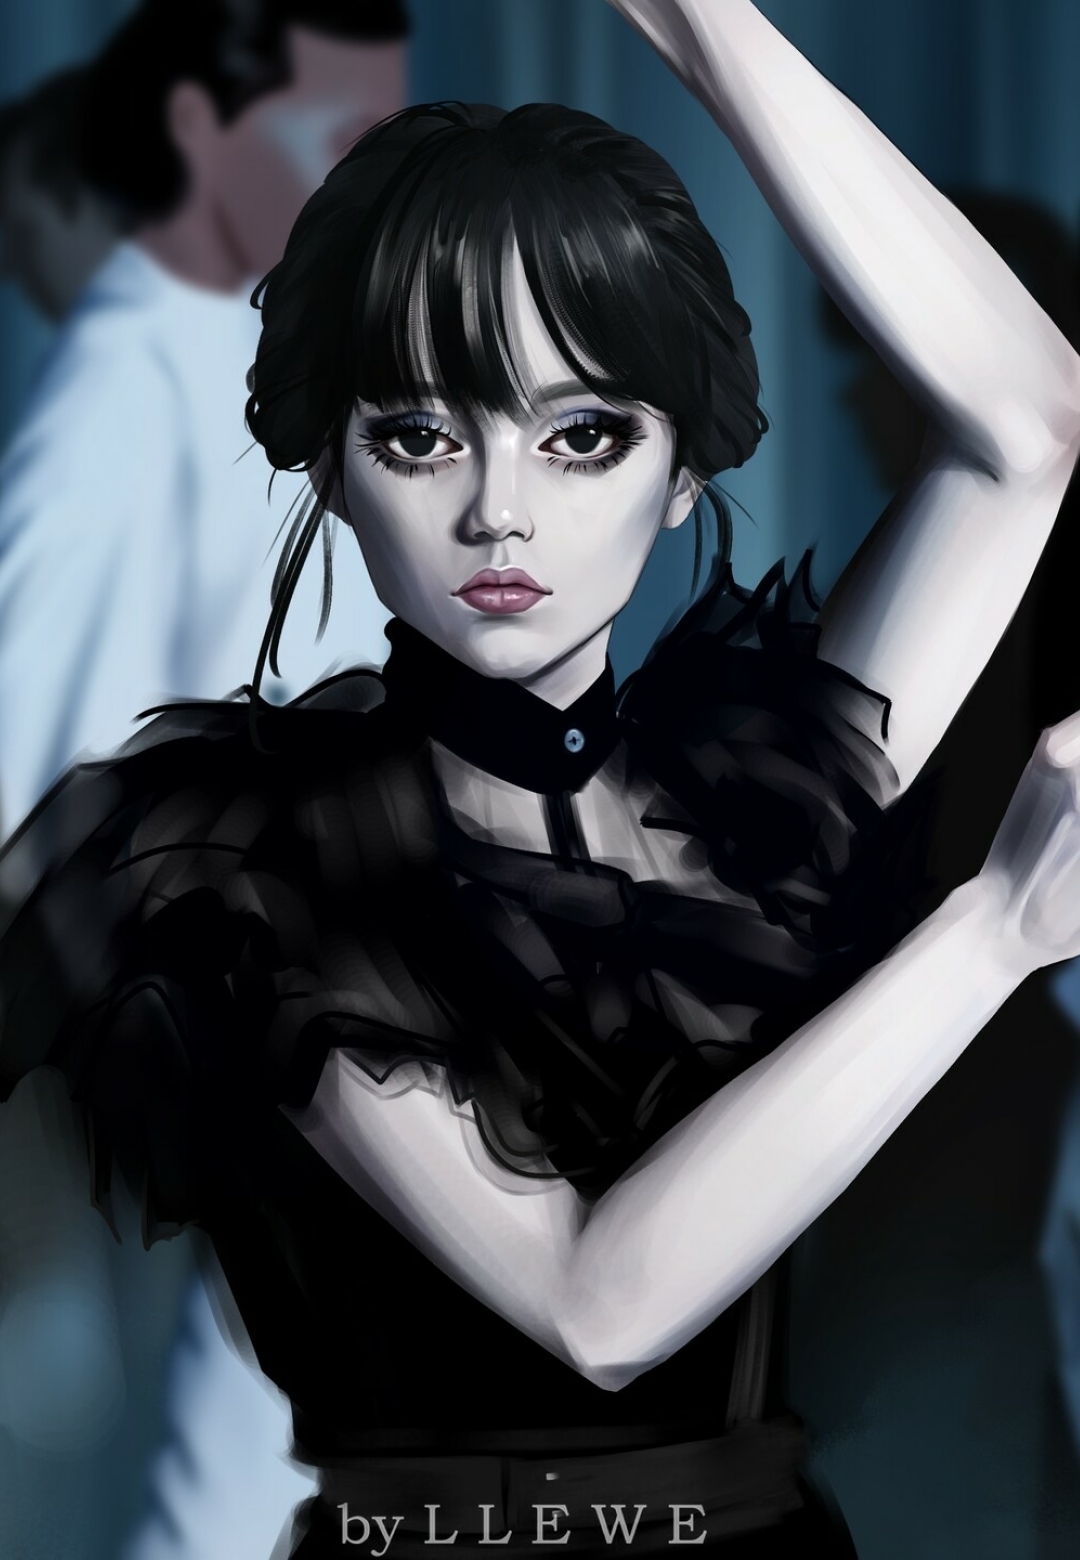 1080x1560 Wednesday Addams Dance Art 1080x1560 Resolution Wallpaper, HD ...